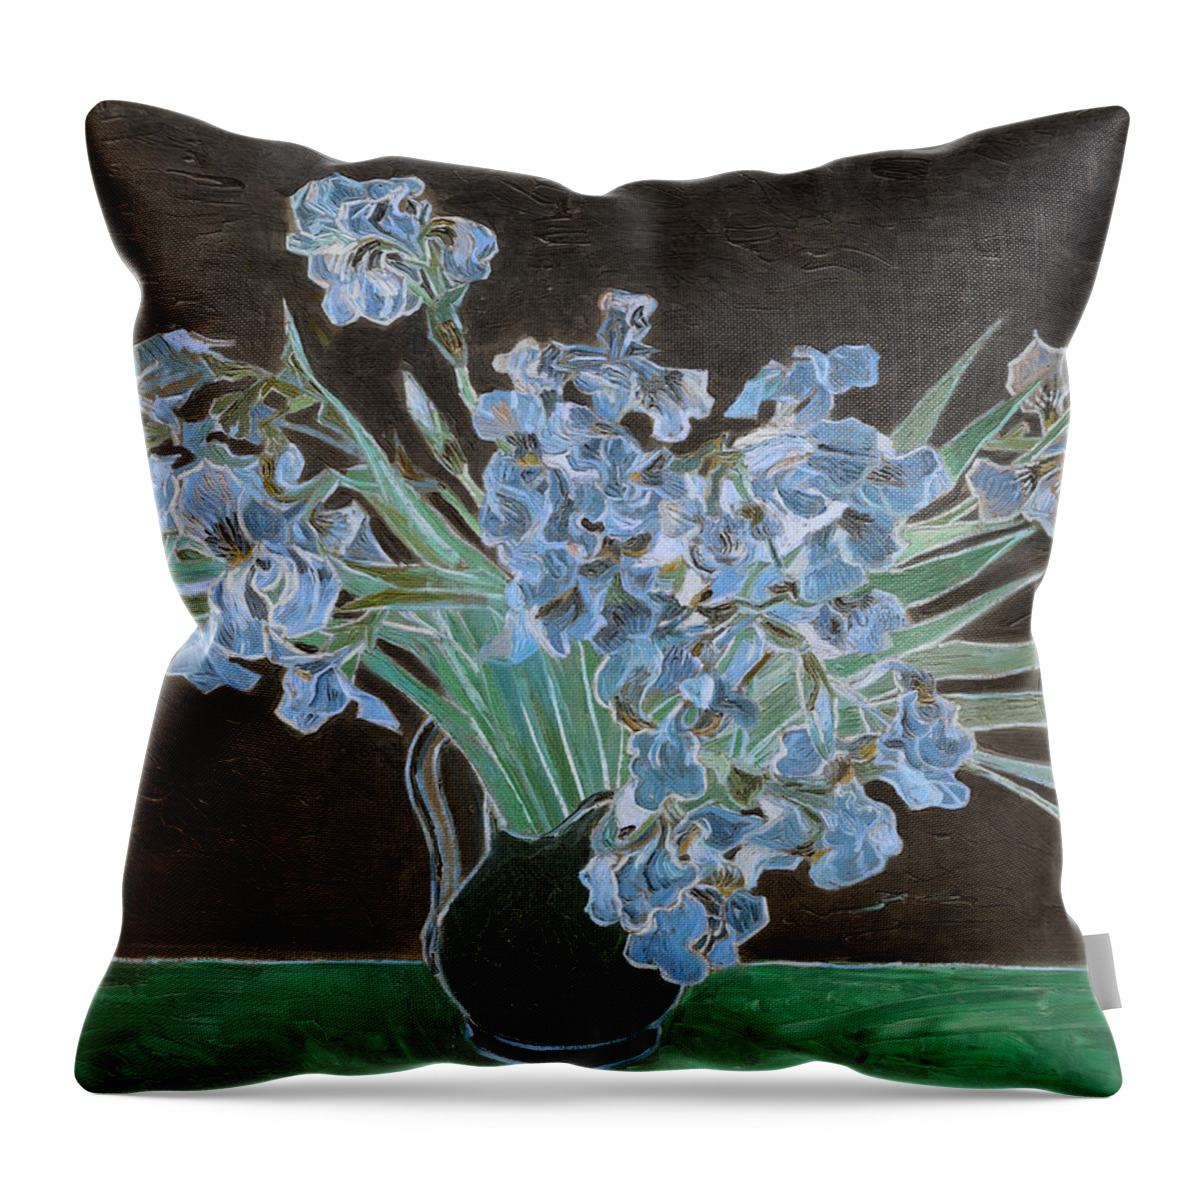 Post Modern Art Throw Pillow featuring the digital art Inv Blend 11 van Gogh by David Bridburg